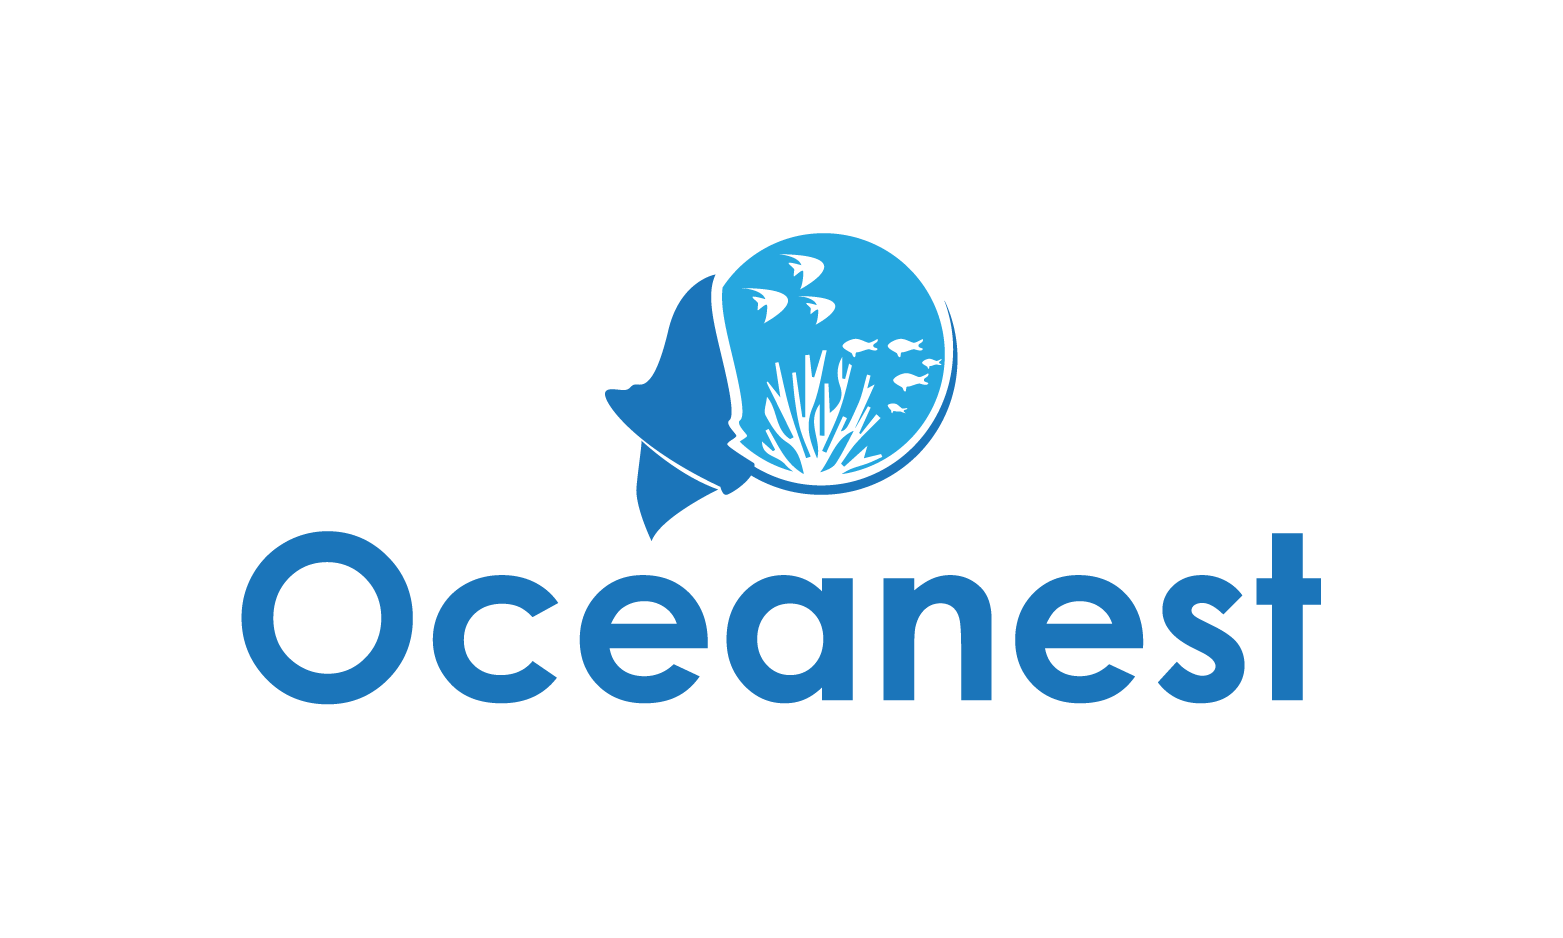 Oceanest.com - Creative brandable domain for sale